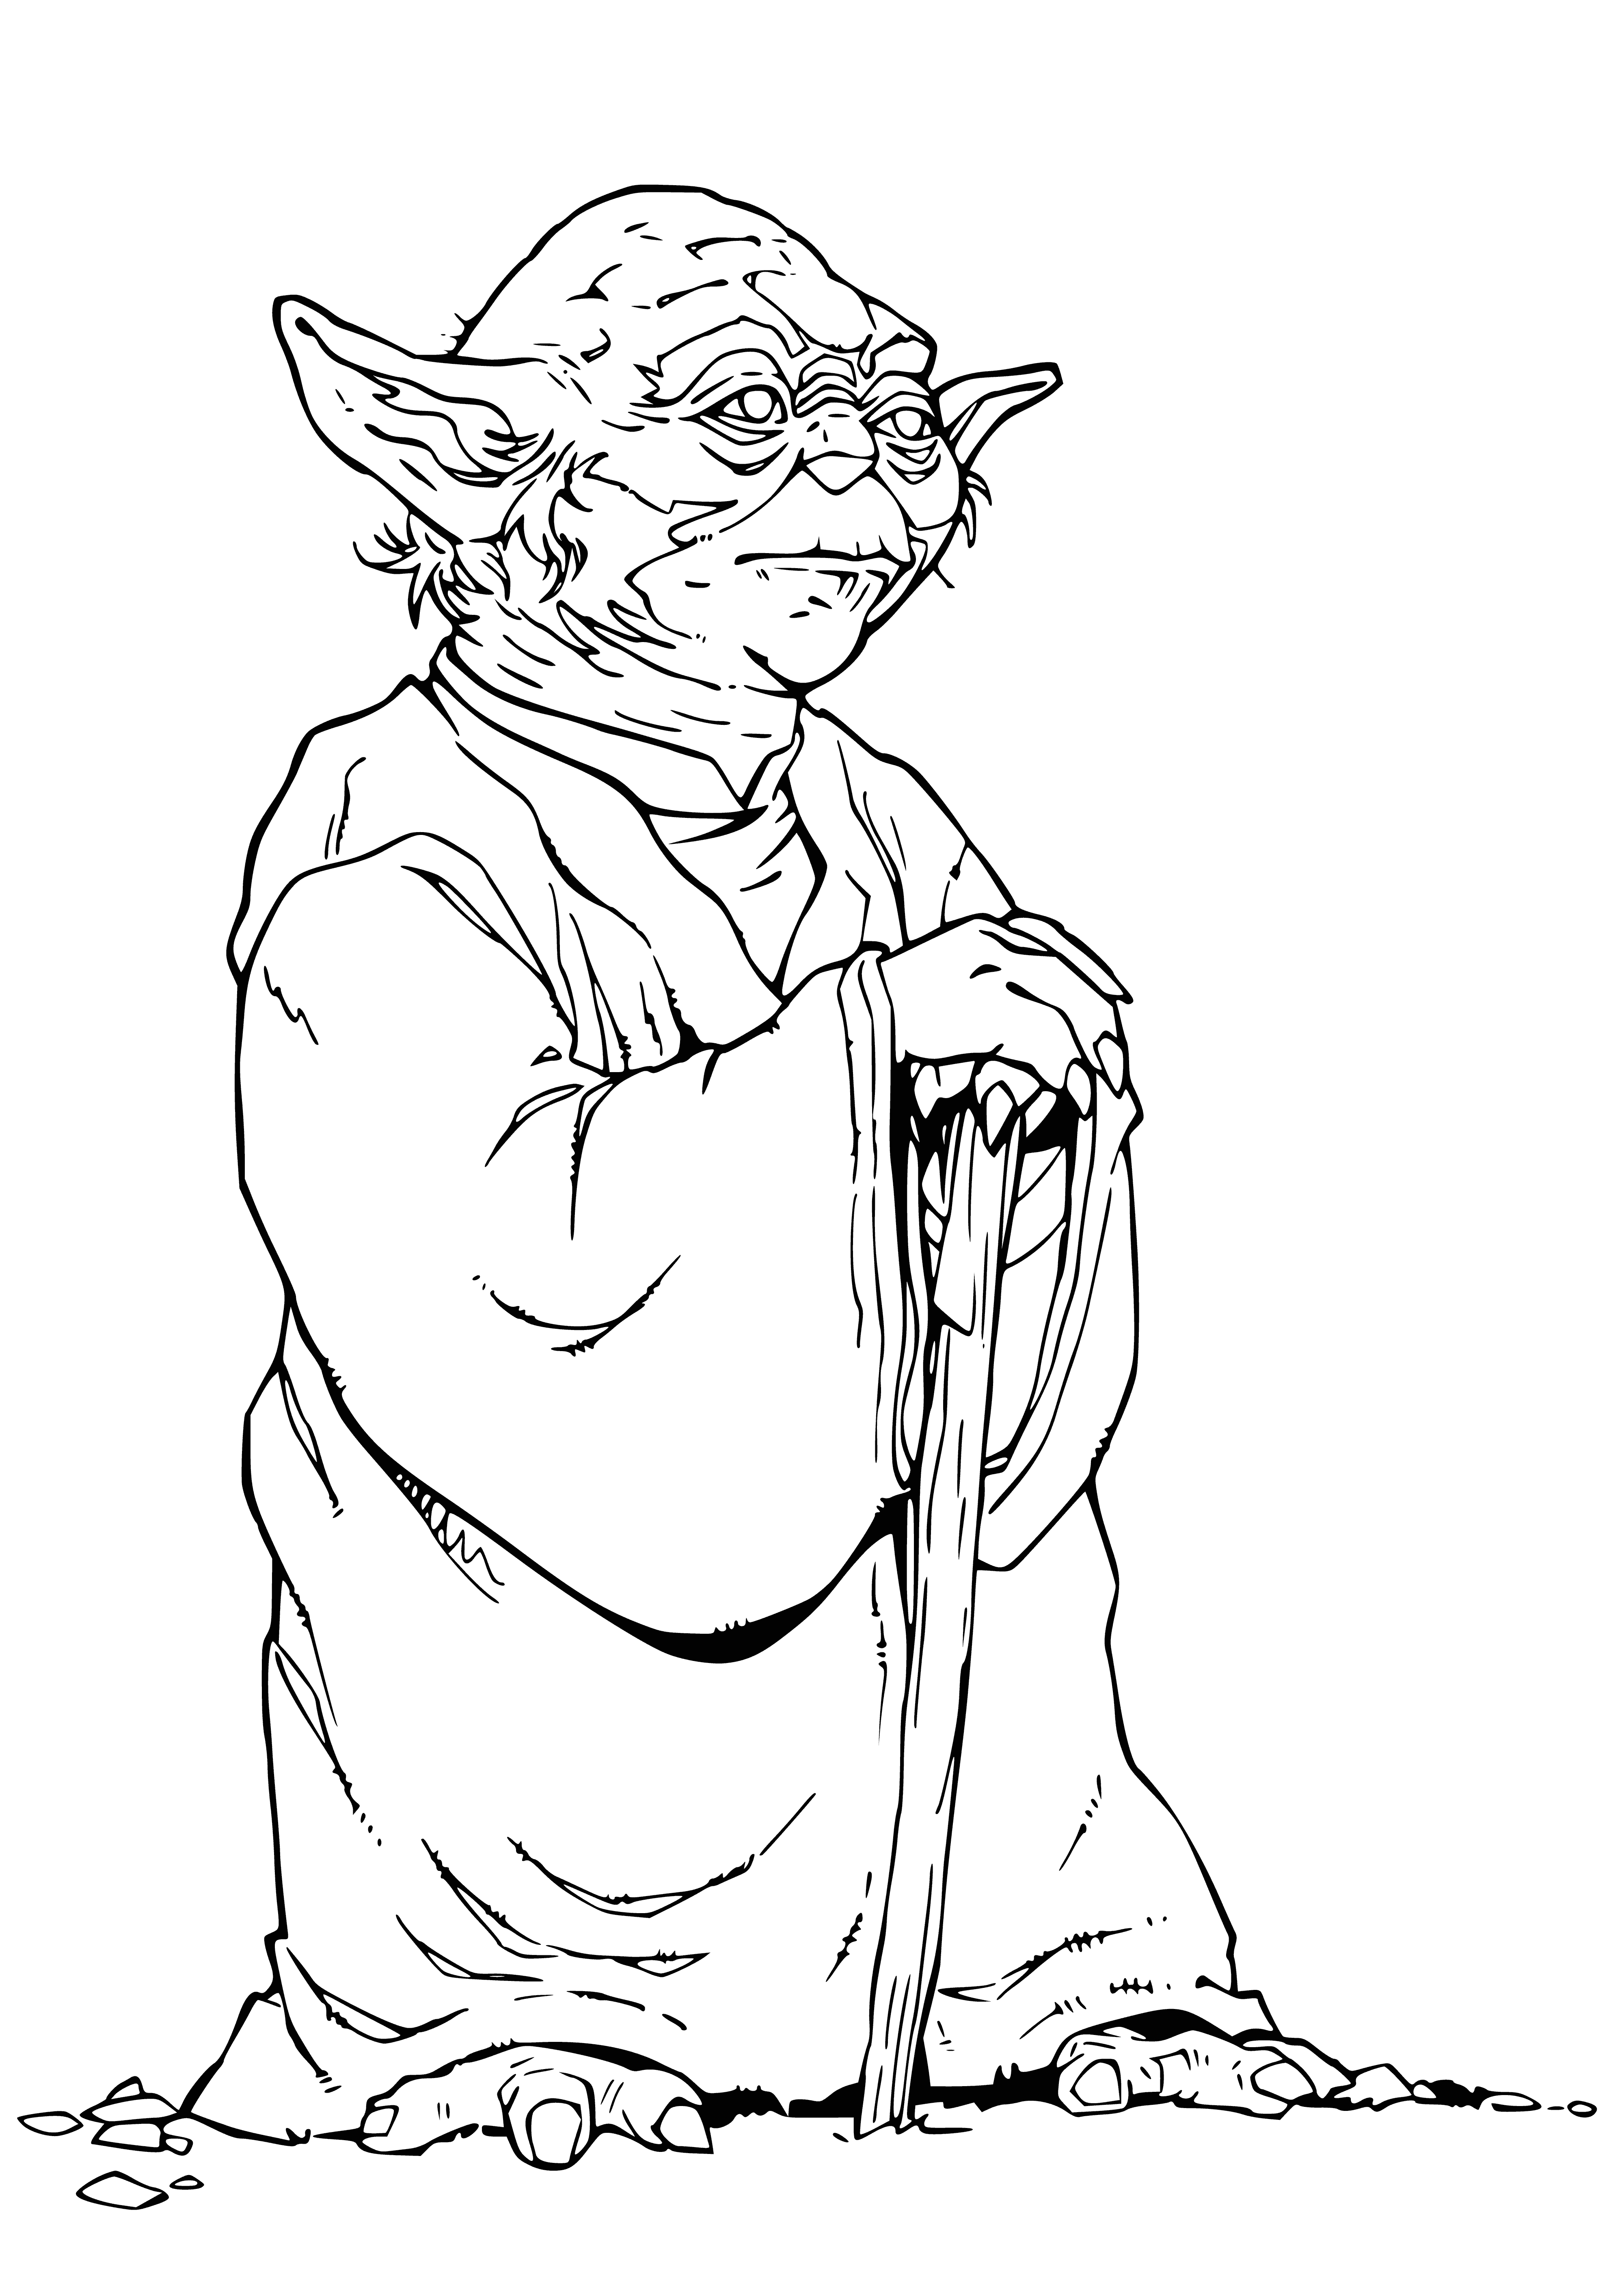 Master Yola coloring page